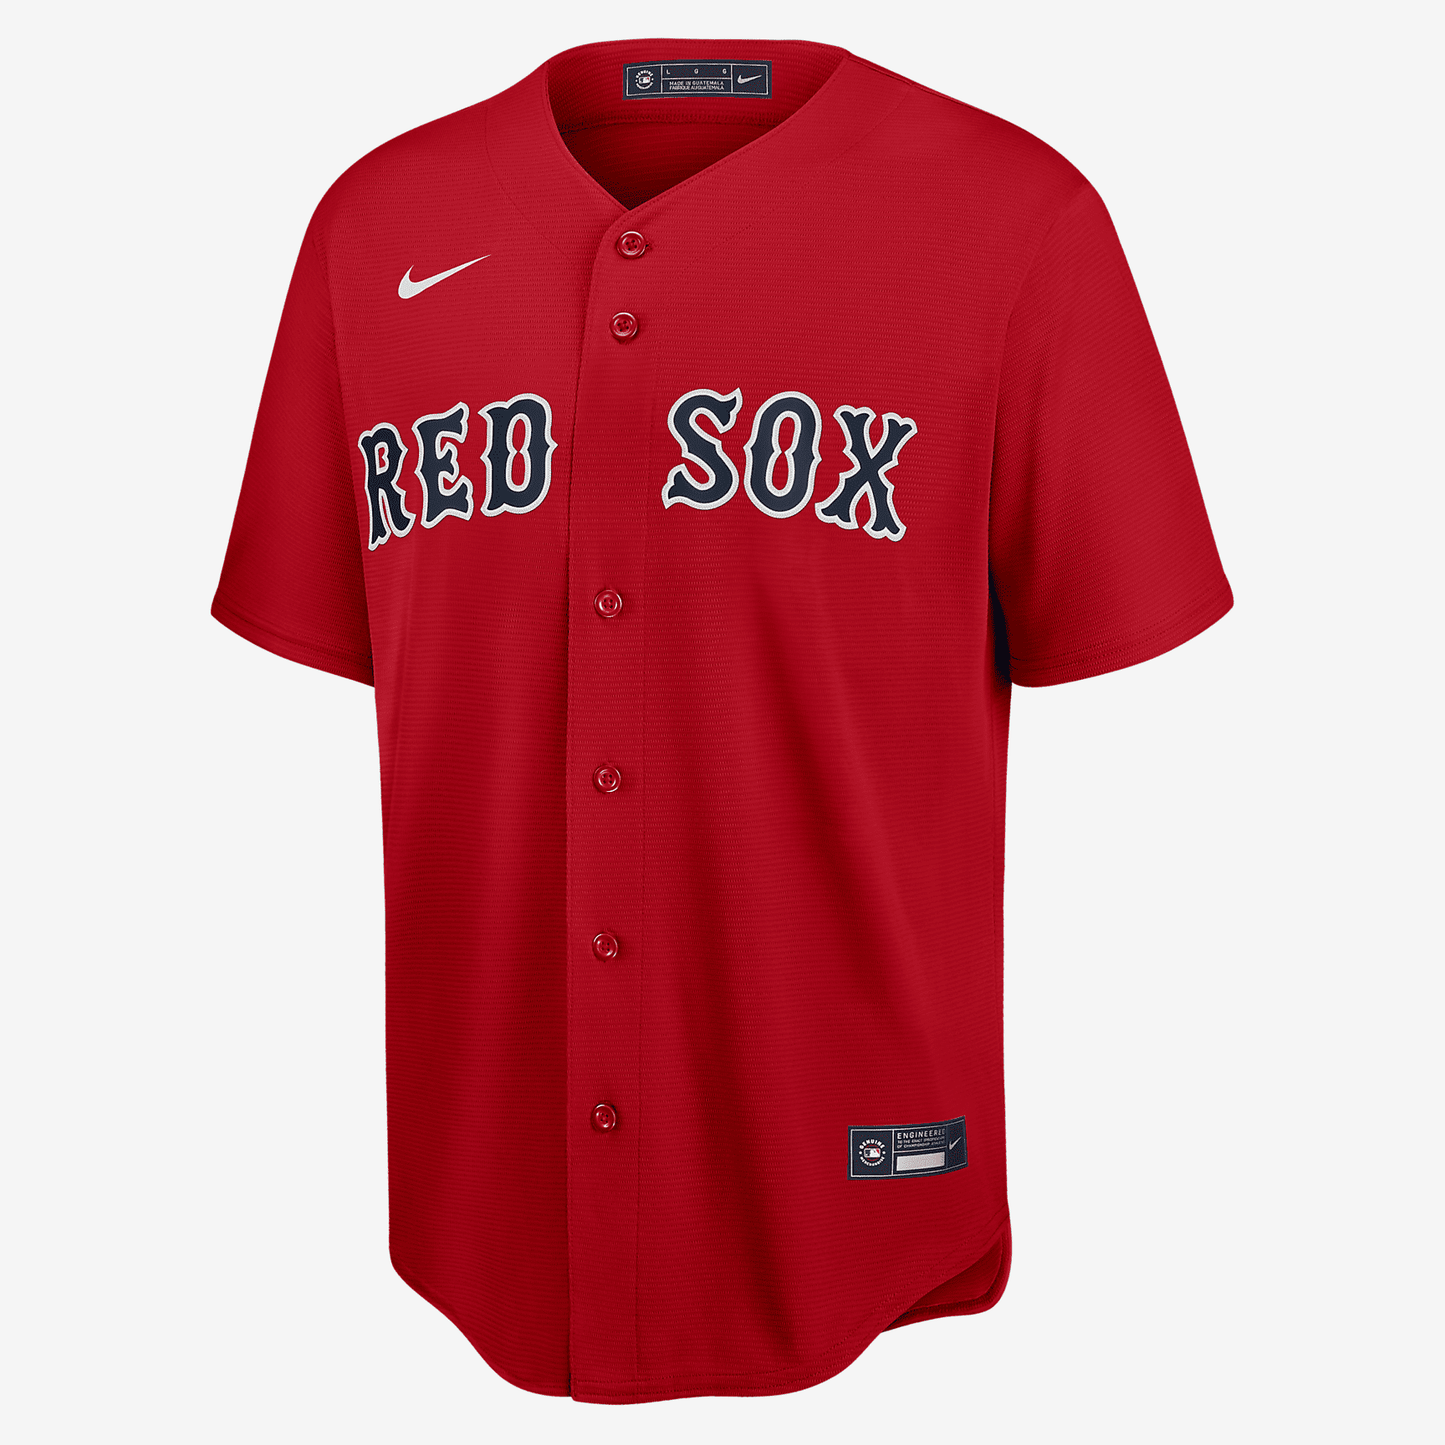 MLB Boston Red Sox Men's Replica Baseball Jersey.